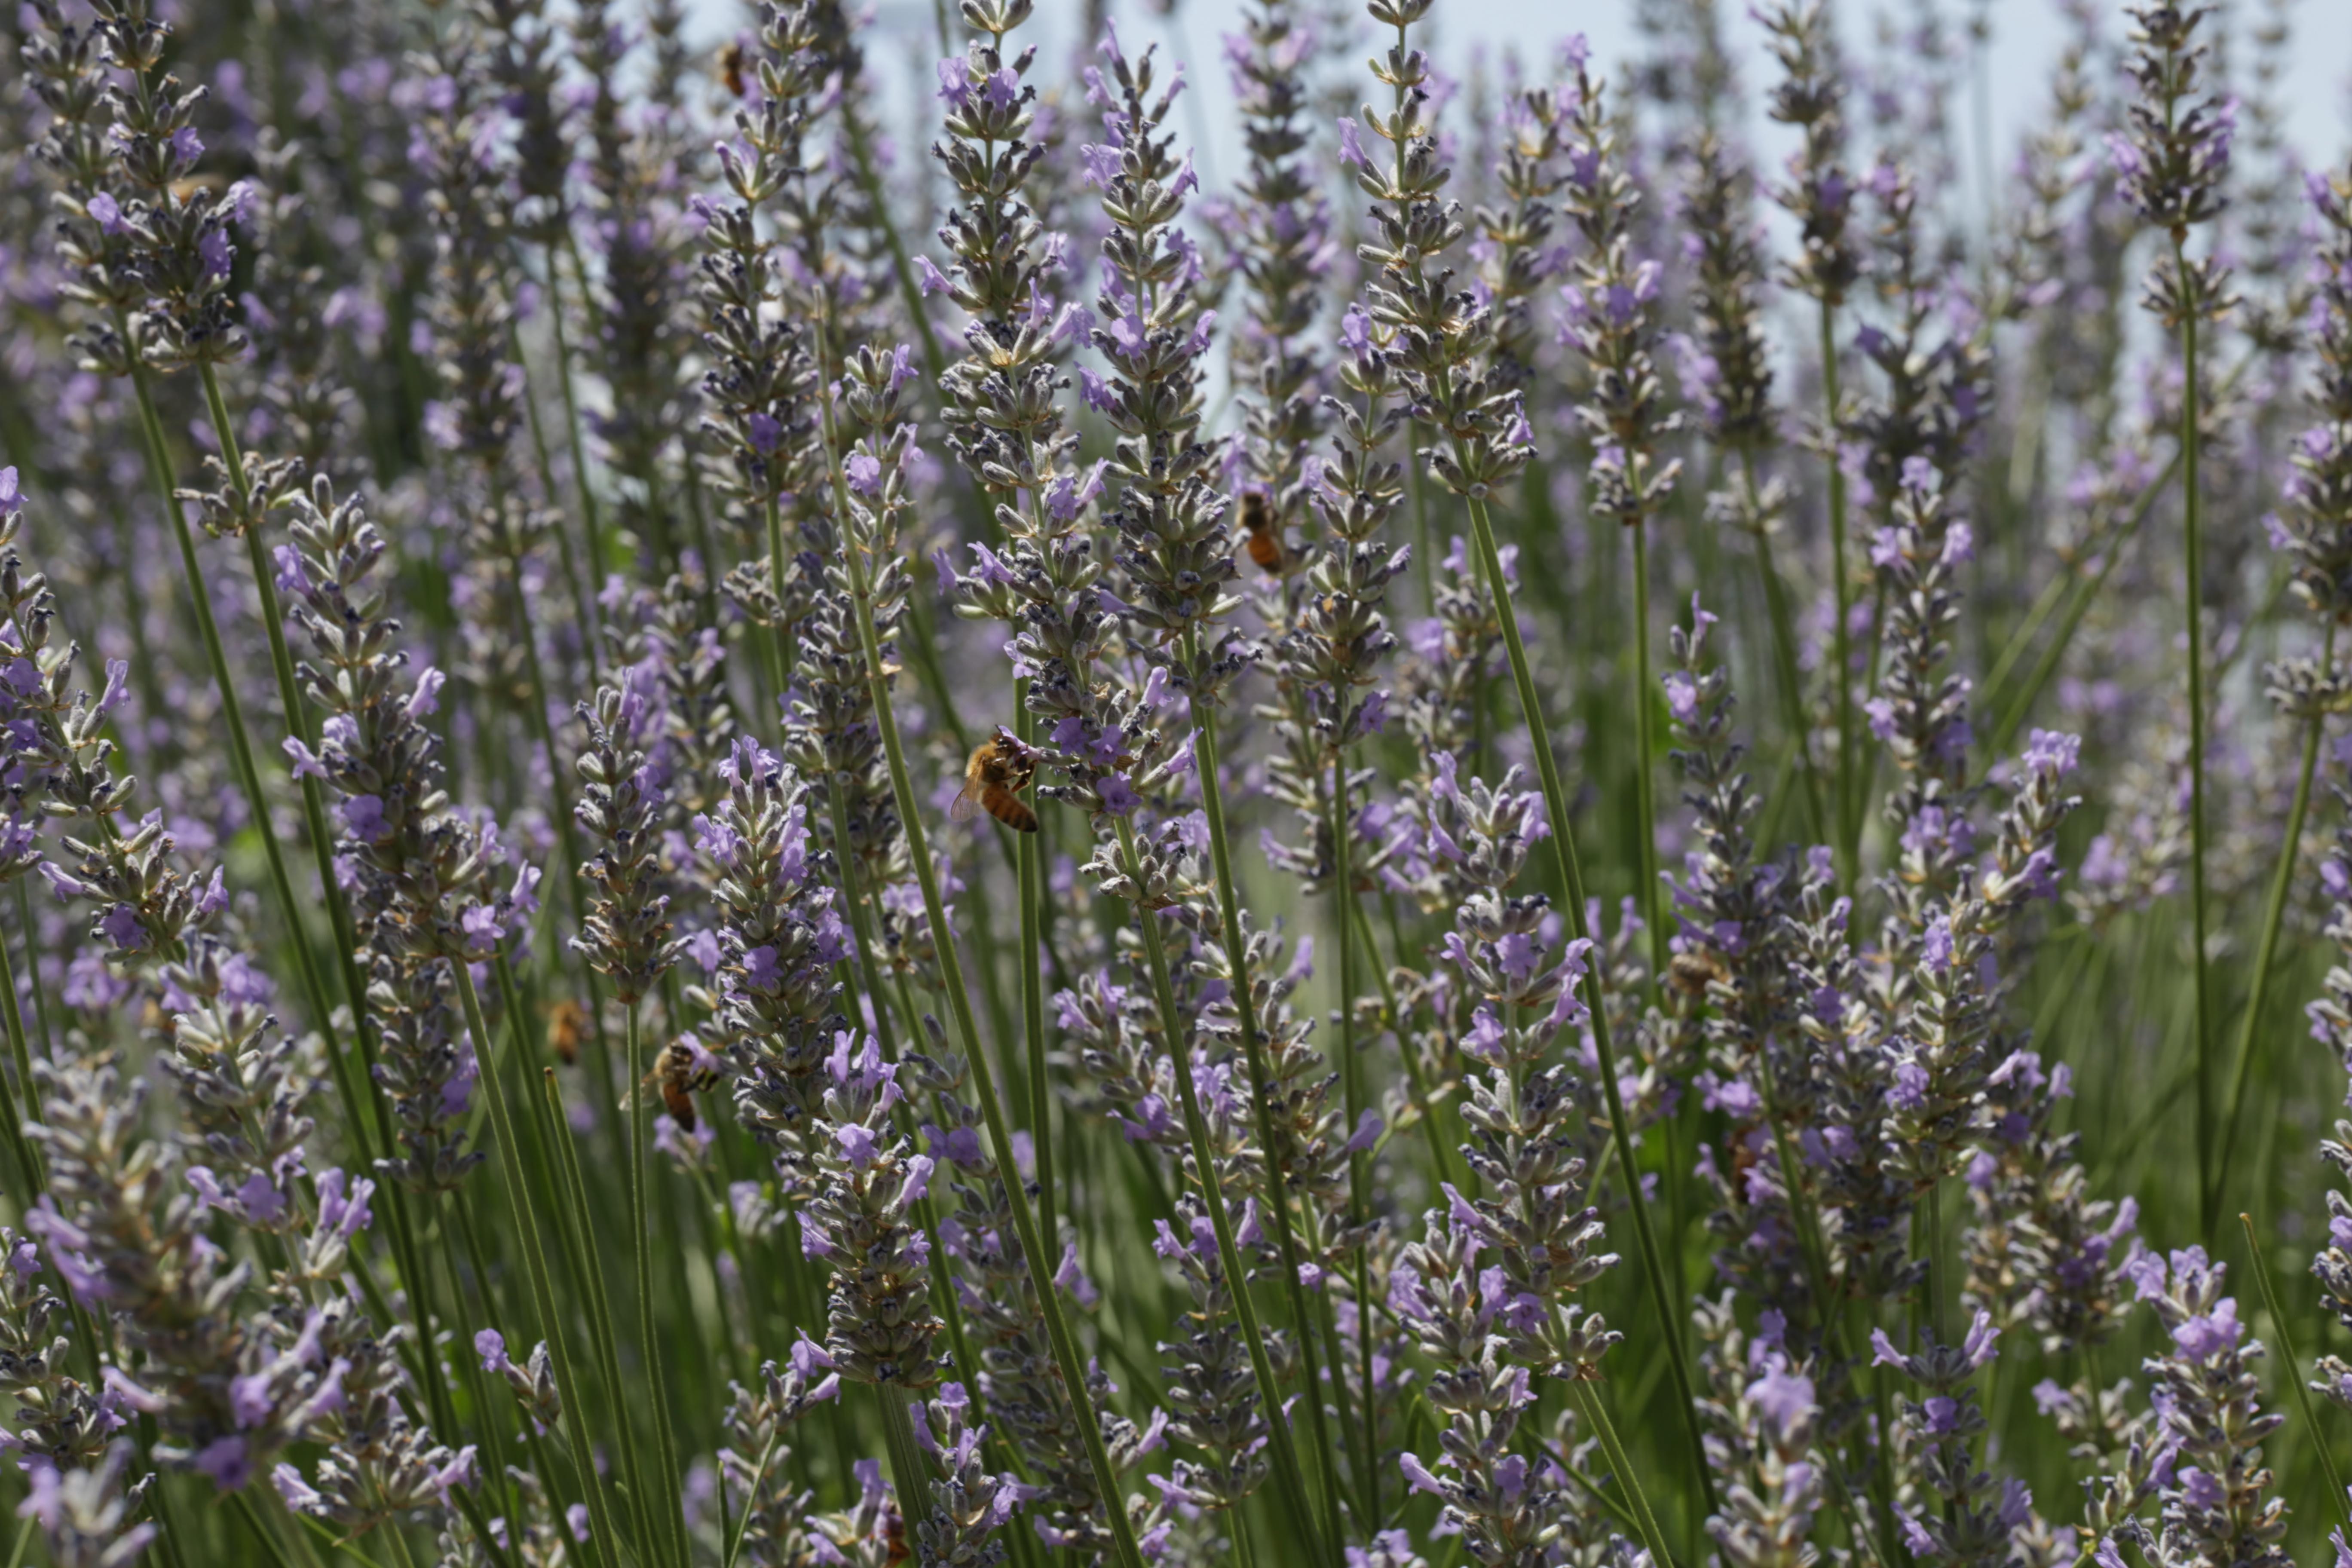 Honey Bees on lavender flowers.